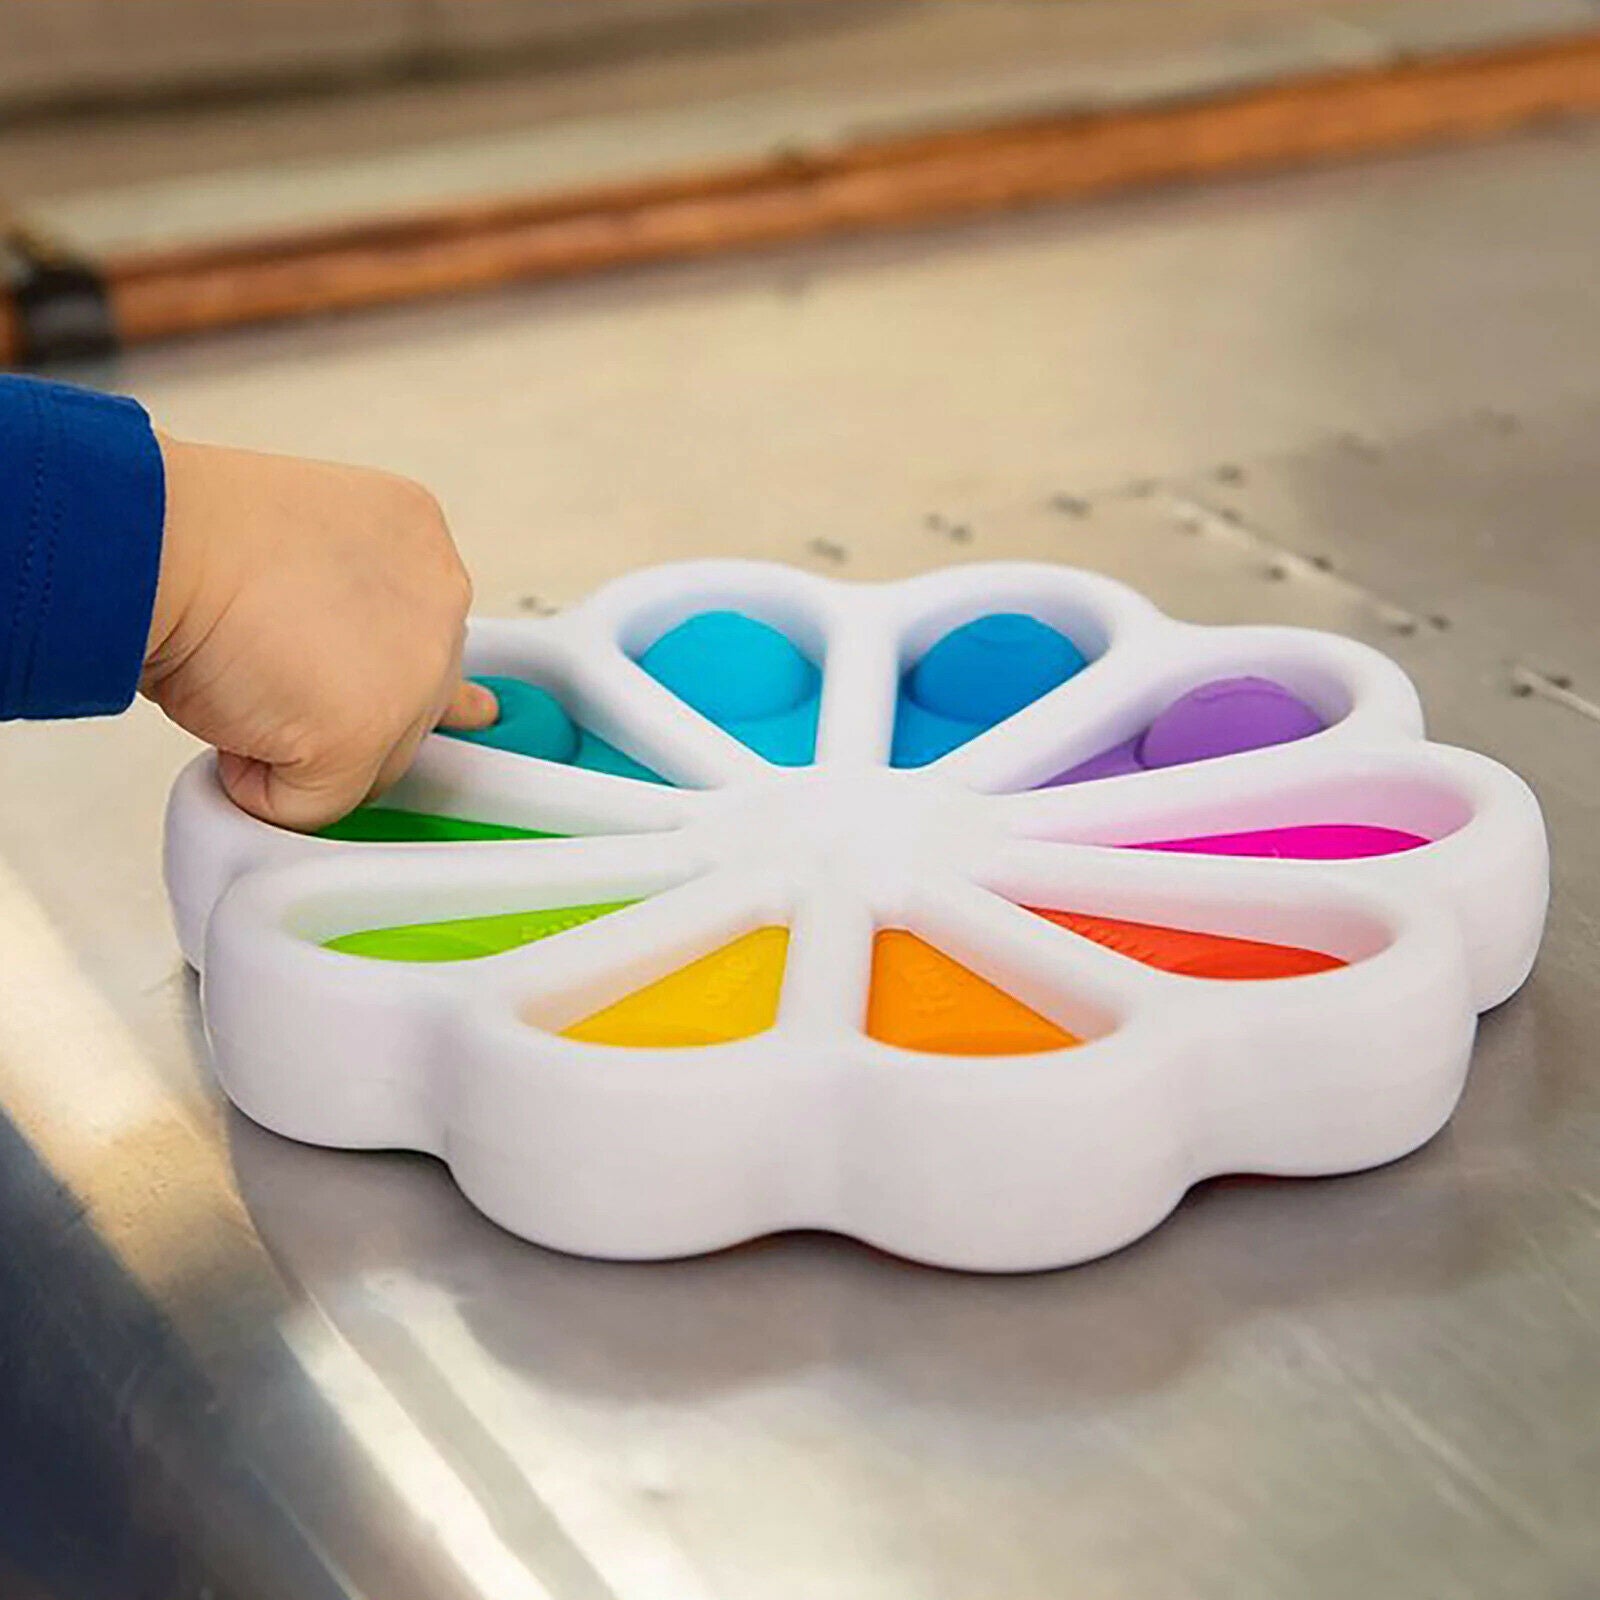 Simple Dimple Fidget Toys Stress Relief Early Educational for Kids Autism Fidget